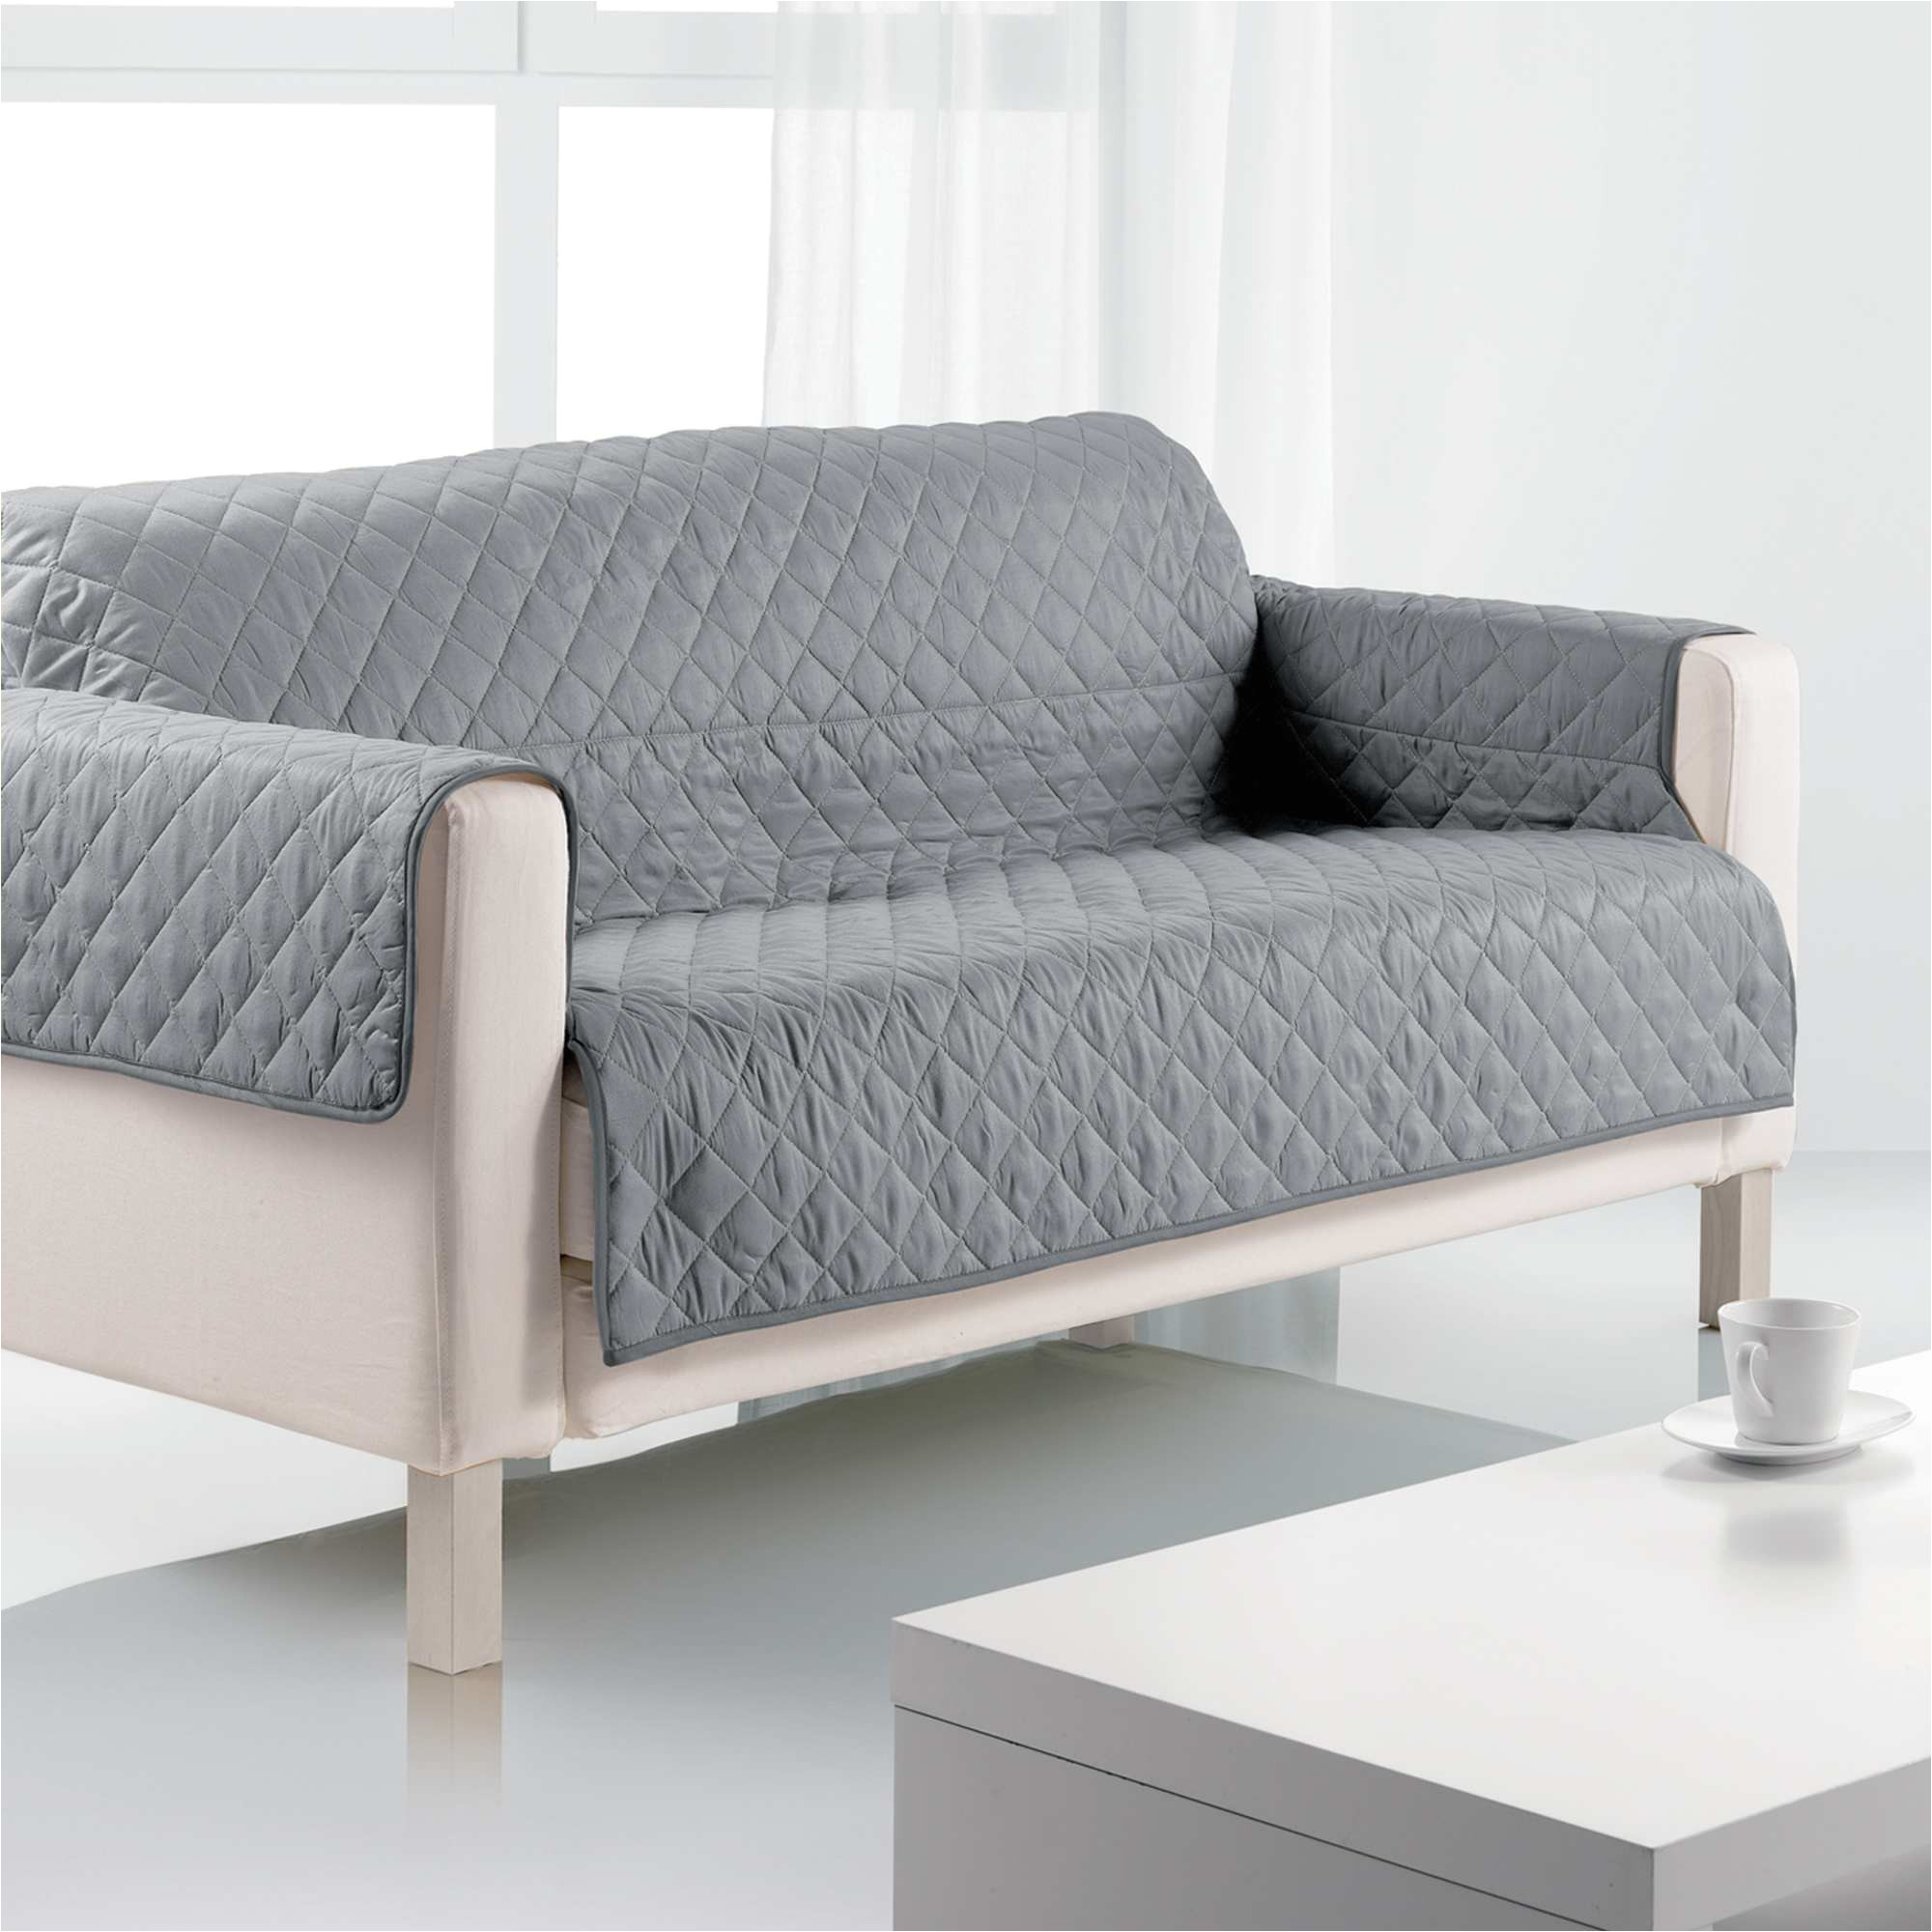 funda sofa cuero a nico sofa mejor funda universal barata fundas para sofas piel baratos of funda